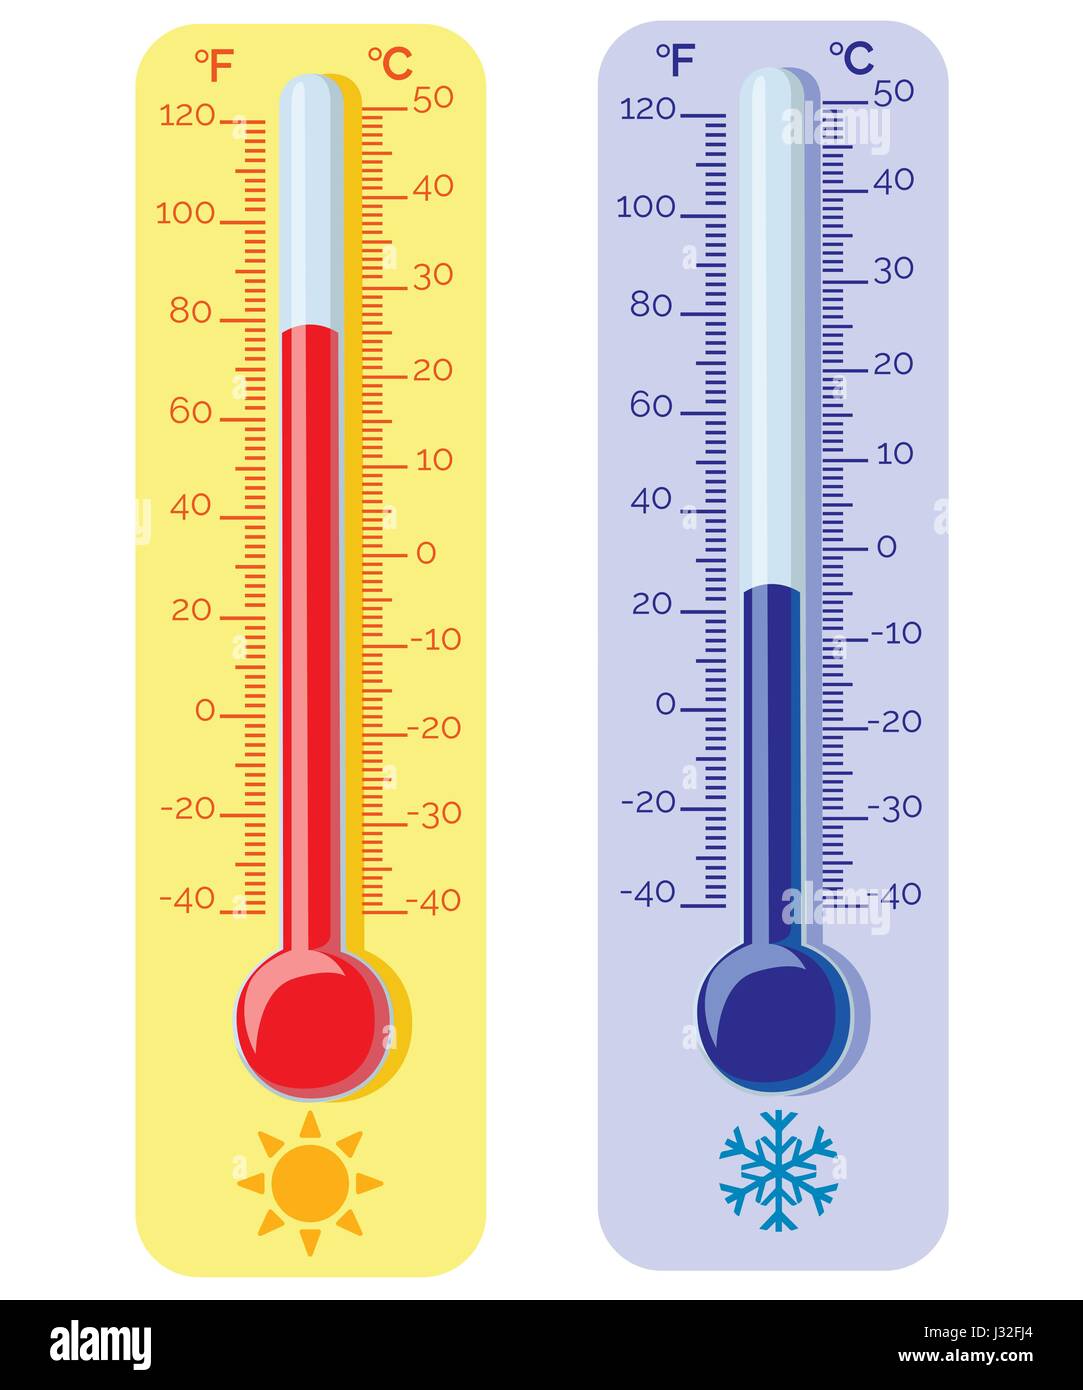 https://www.alamy.com/aggregator-api/download?url=https://c8.alamy.com/comp/J32FJ4/thermometer-equipment-showing-hot-or-cold-weather-celsius-and-fahrenheit-J32FJ4.jpg